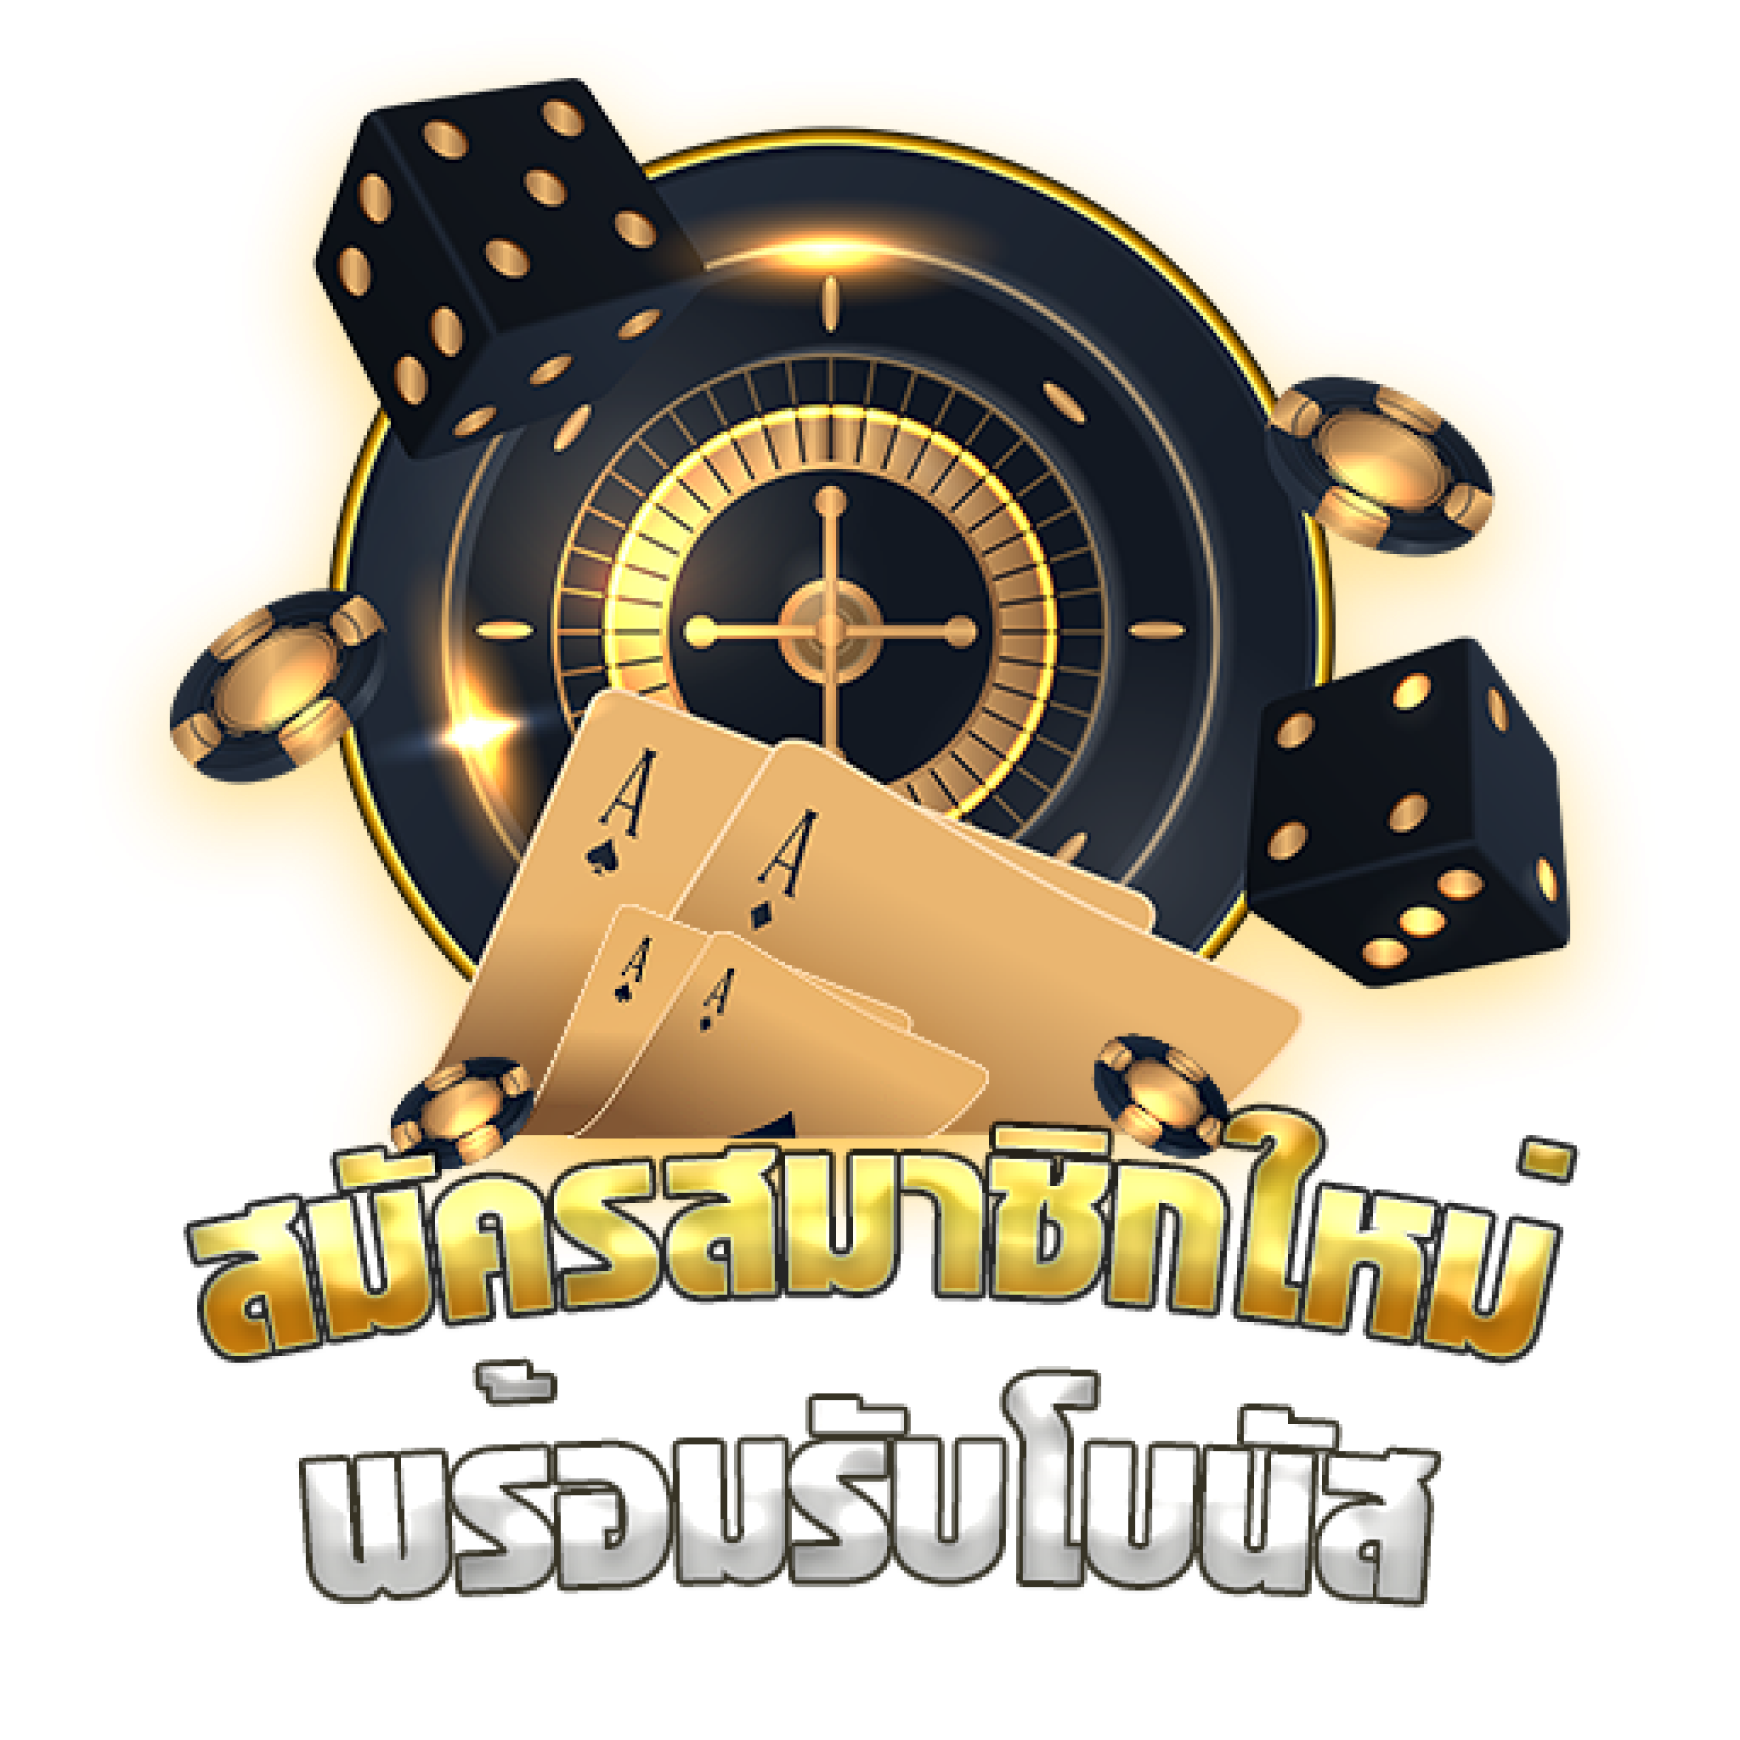 button popup left - Sagame www.sagame168th.com 12 กรกฏาคม 2565 บาคาร่า สมัครบาคาร่าออนไลน์ websiteบาคาร่า 168 เล่น casino online ฟรี ท๊อป 100 Thai by Lisa